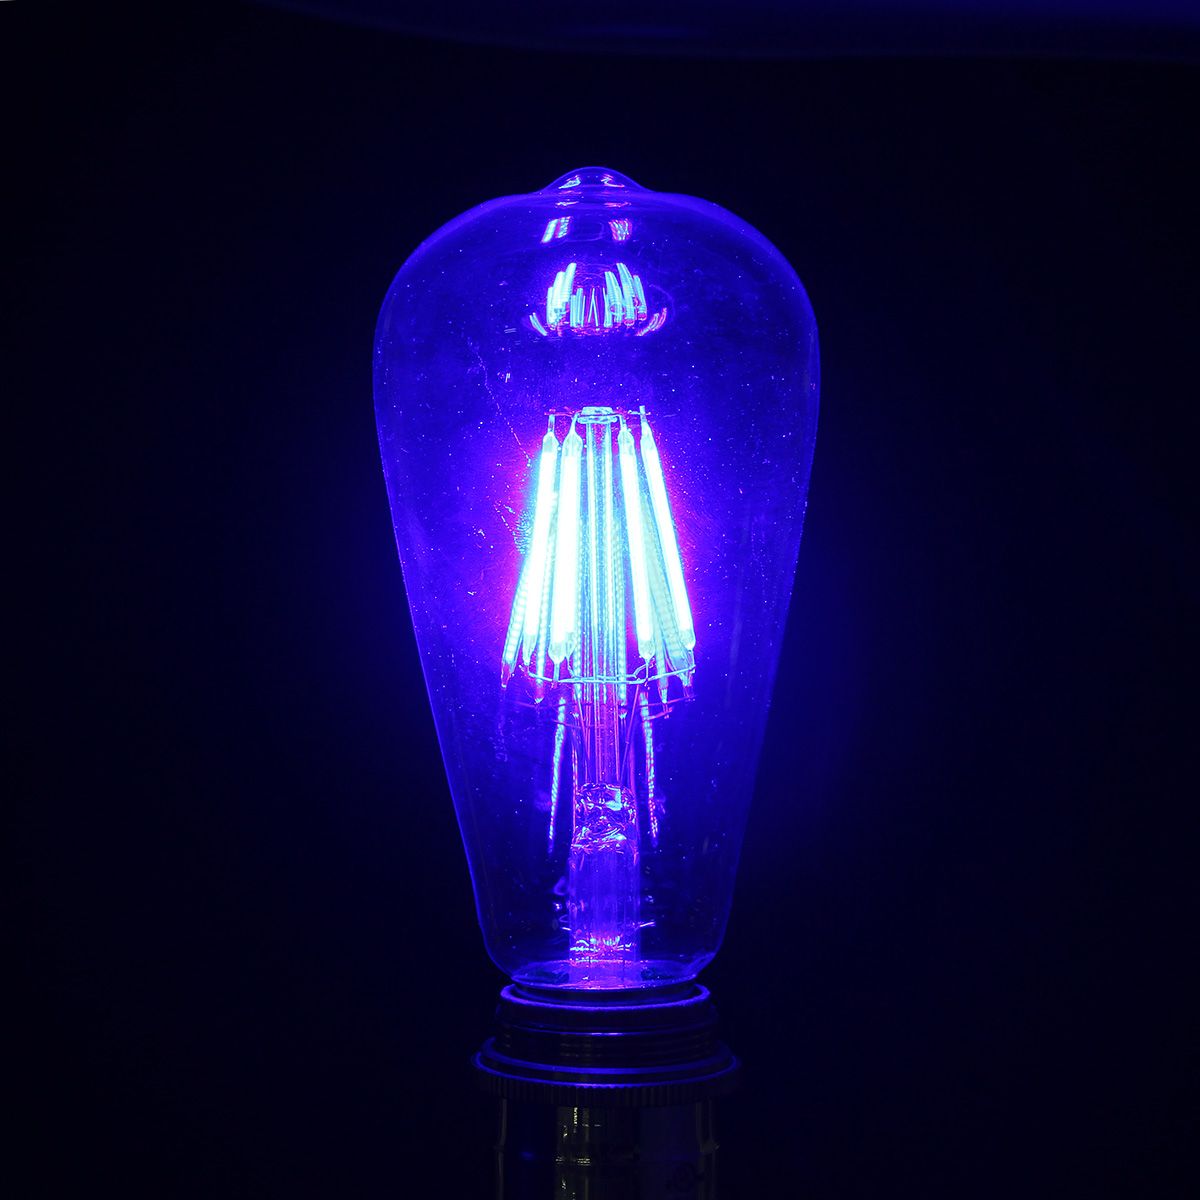 E27-Retro-Edison-Globe-Bulbs-6W-Screw-LED-COB-Bulbs-RGB-Colorful-Light-Lamp-Energy-Efficient-AC220V-1102547